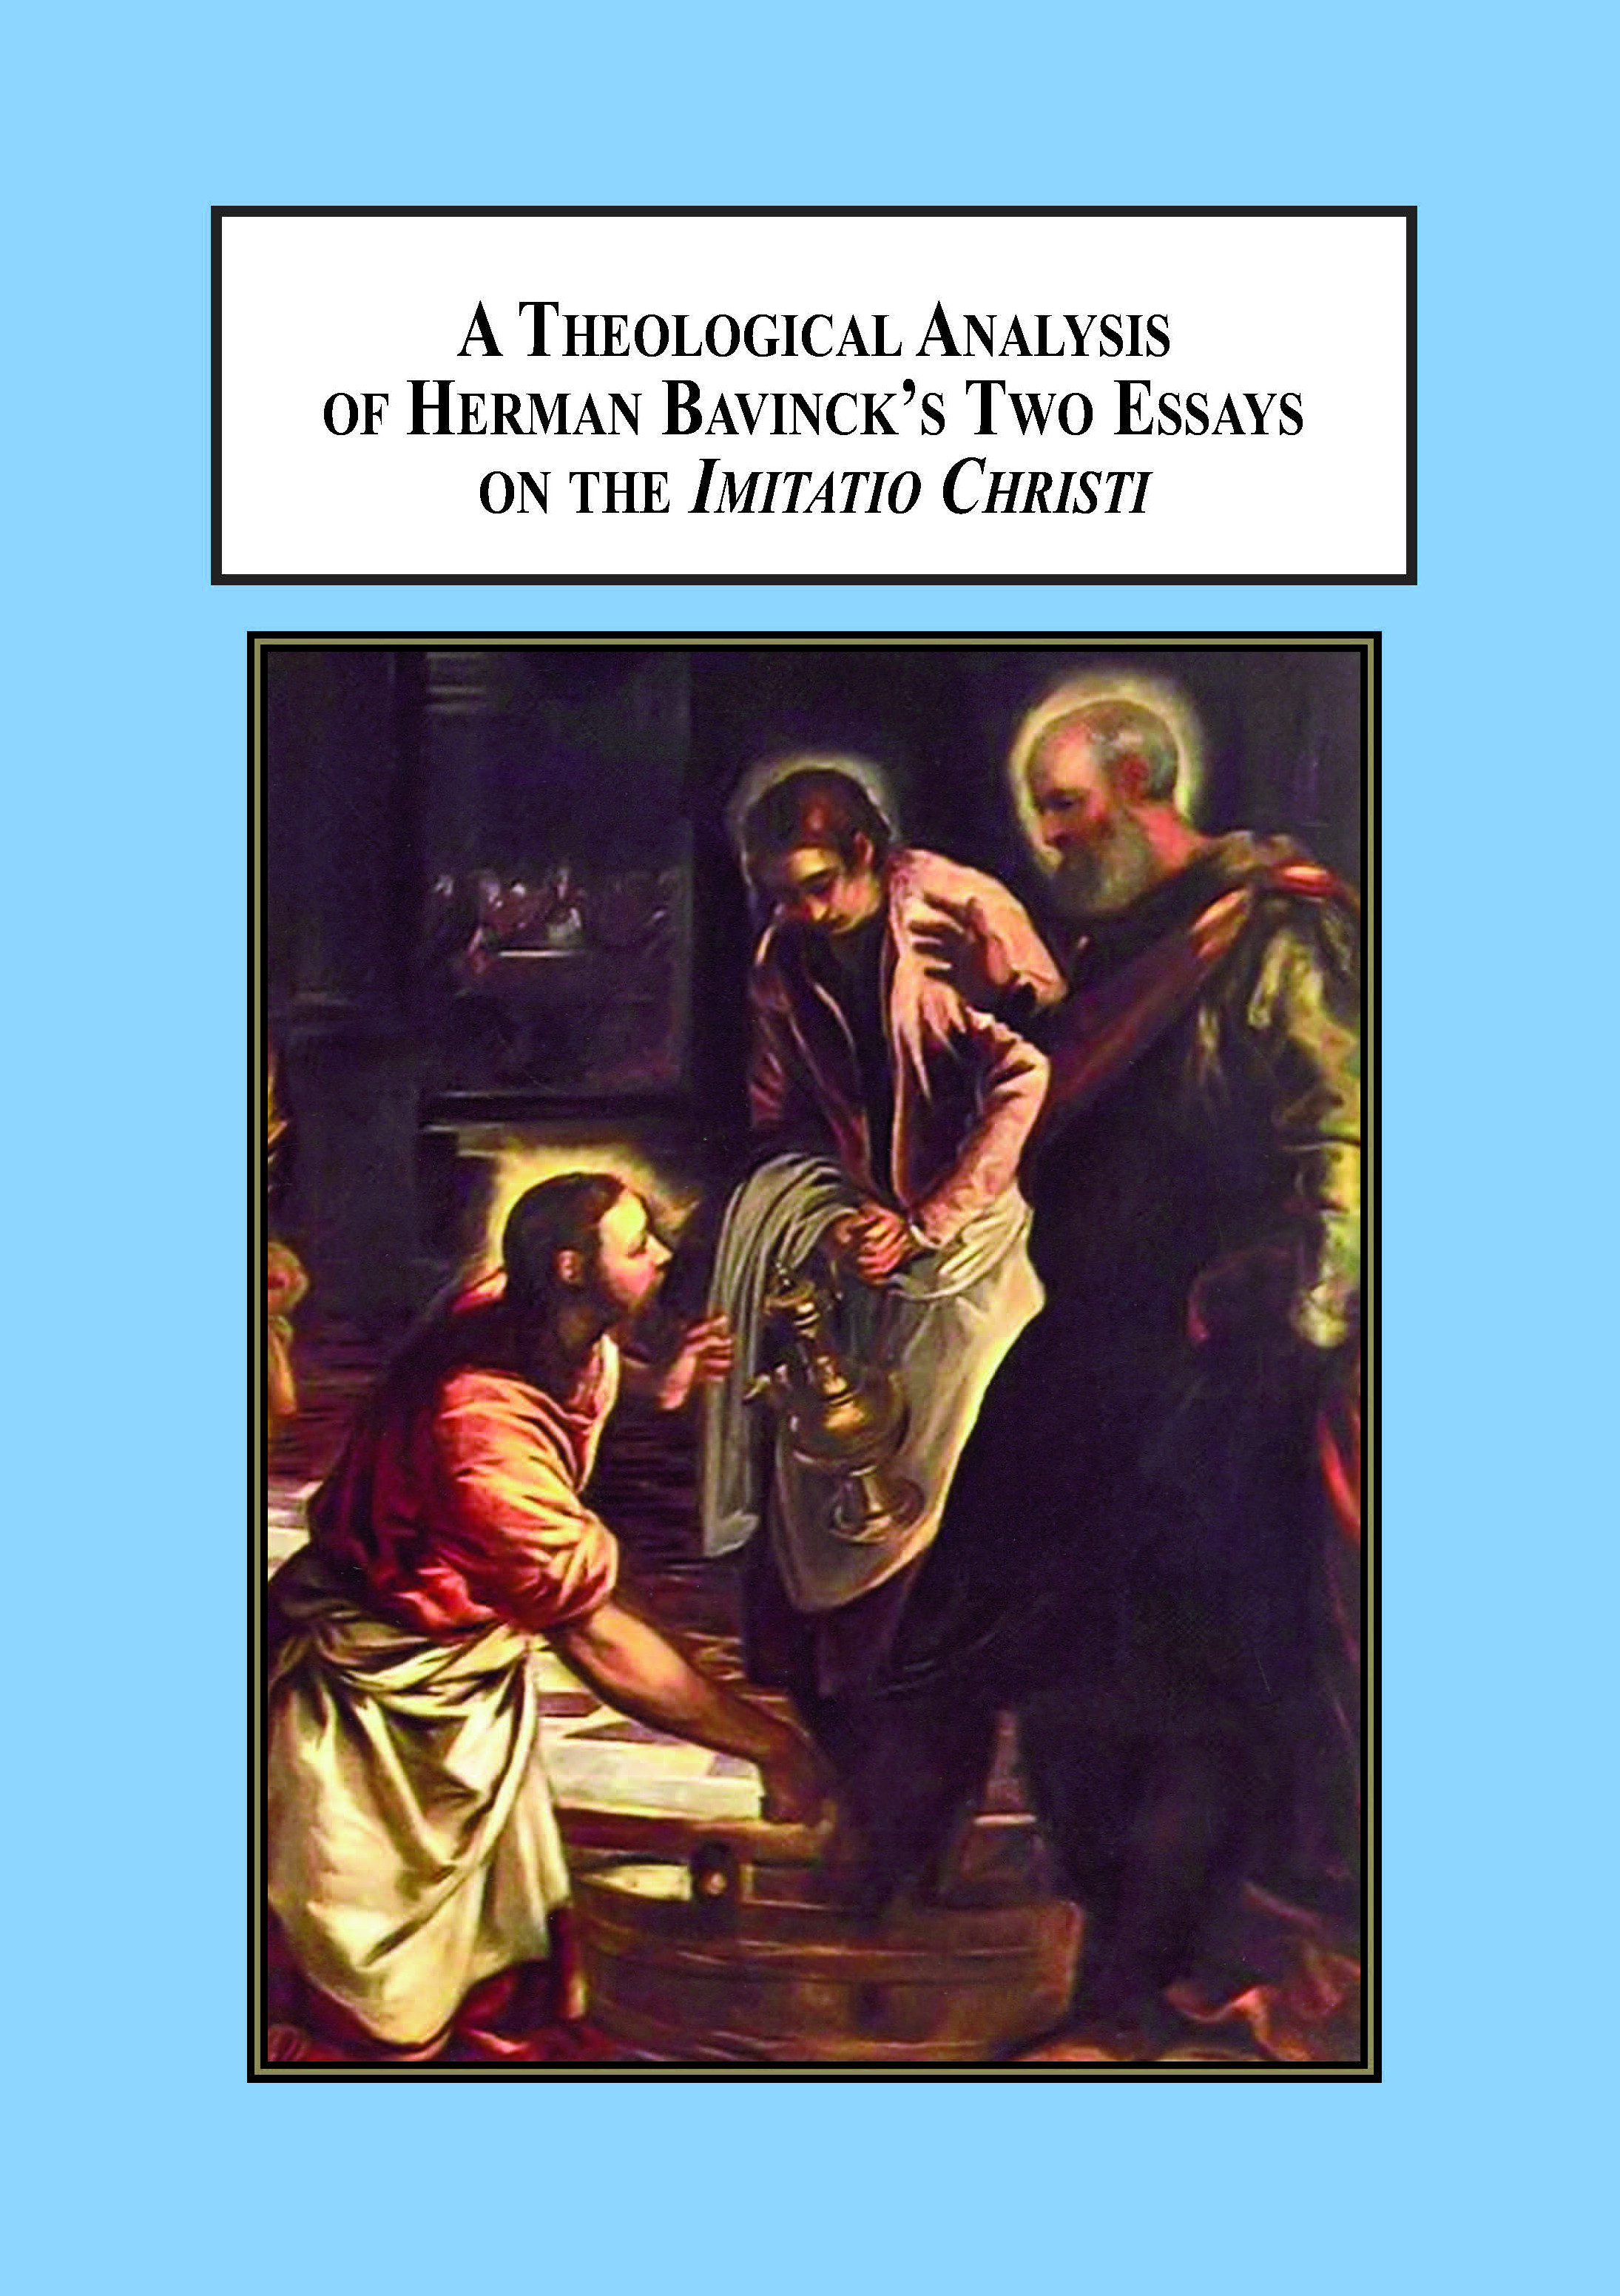 A Theological Analysis of Herman Bavinck's Two Essays on the Imitatio Christi